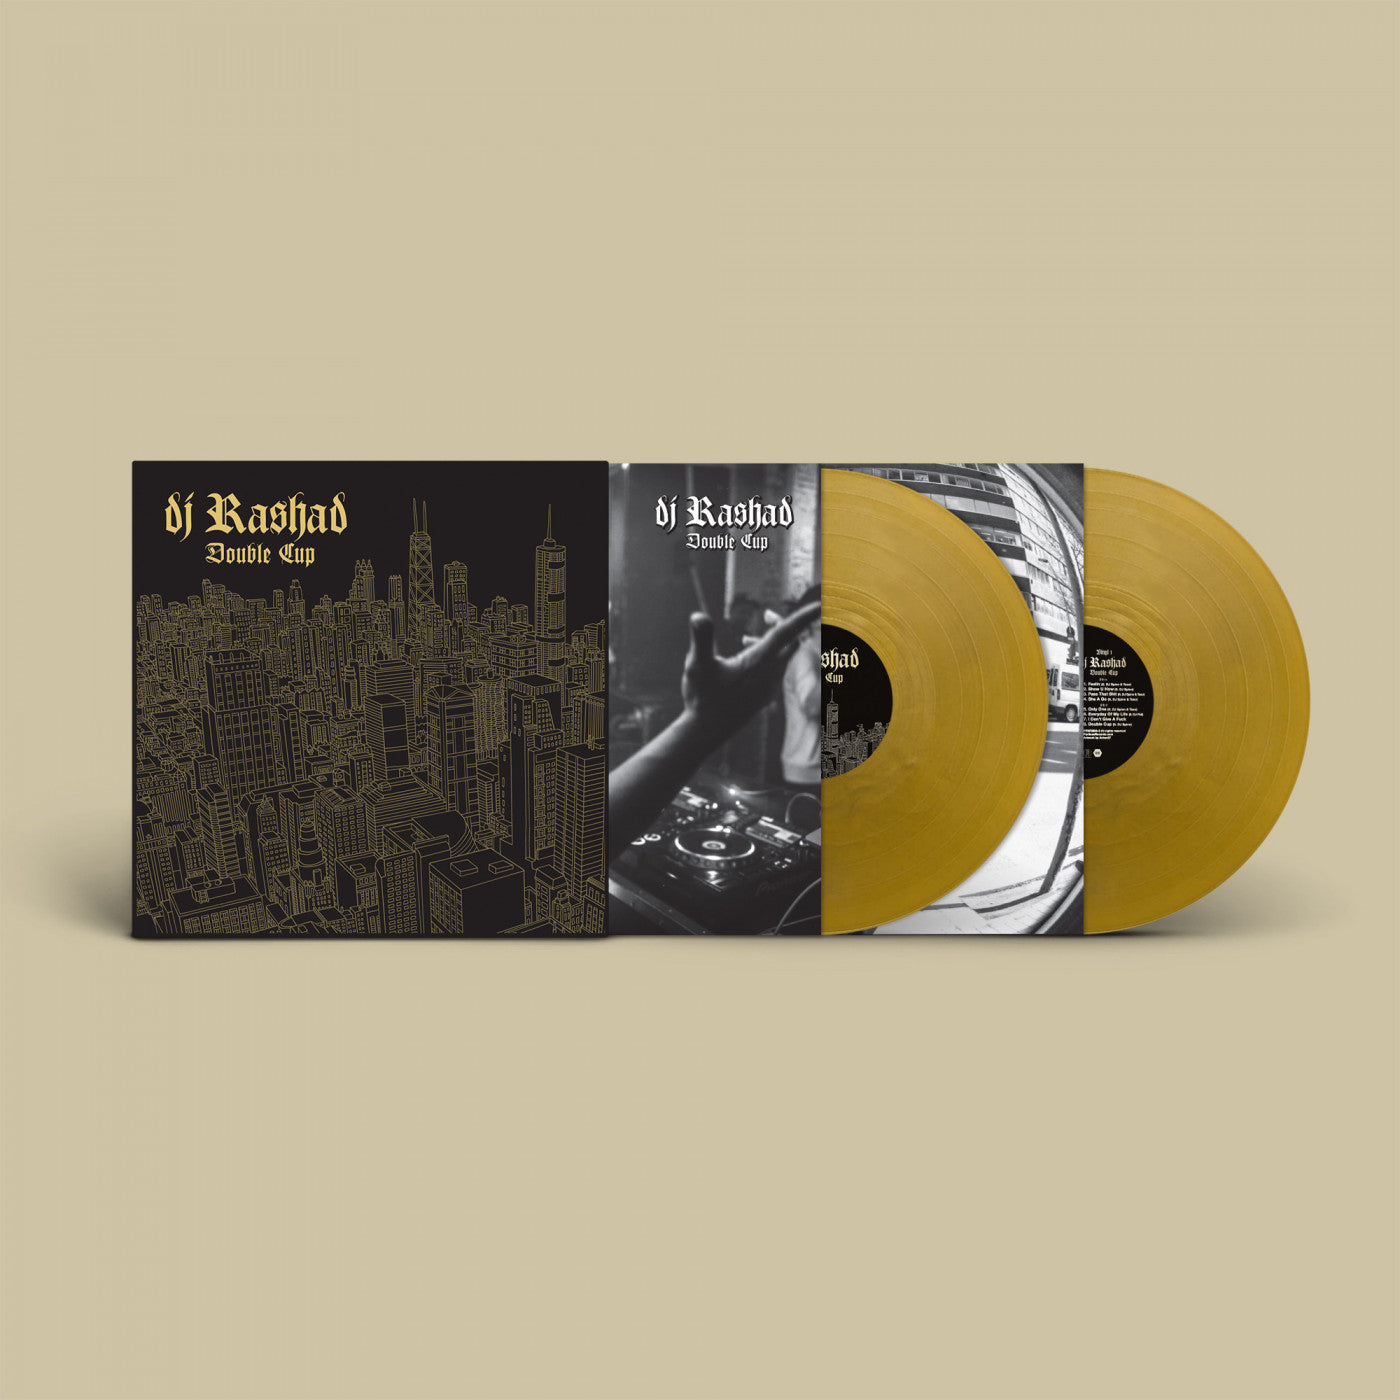 DJ Rashad - Double Cup [Gold Vinyl]